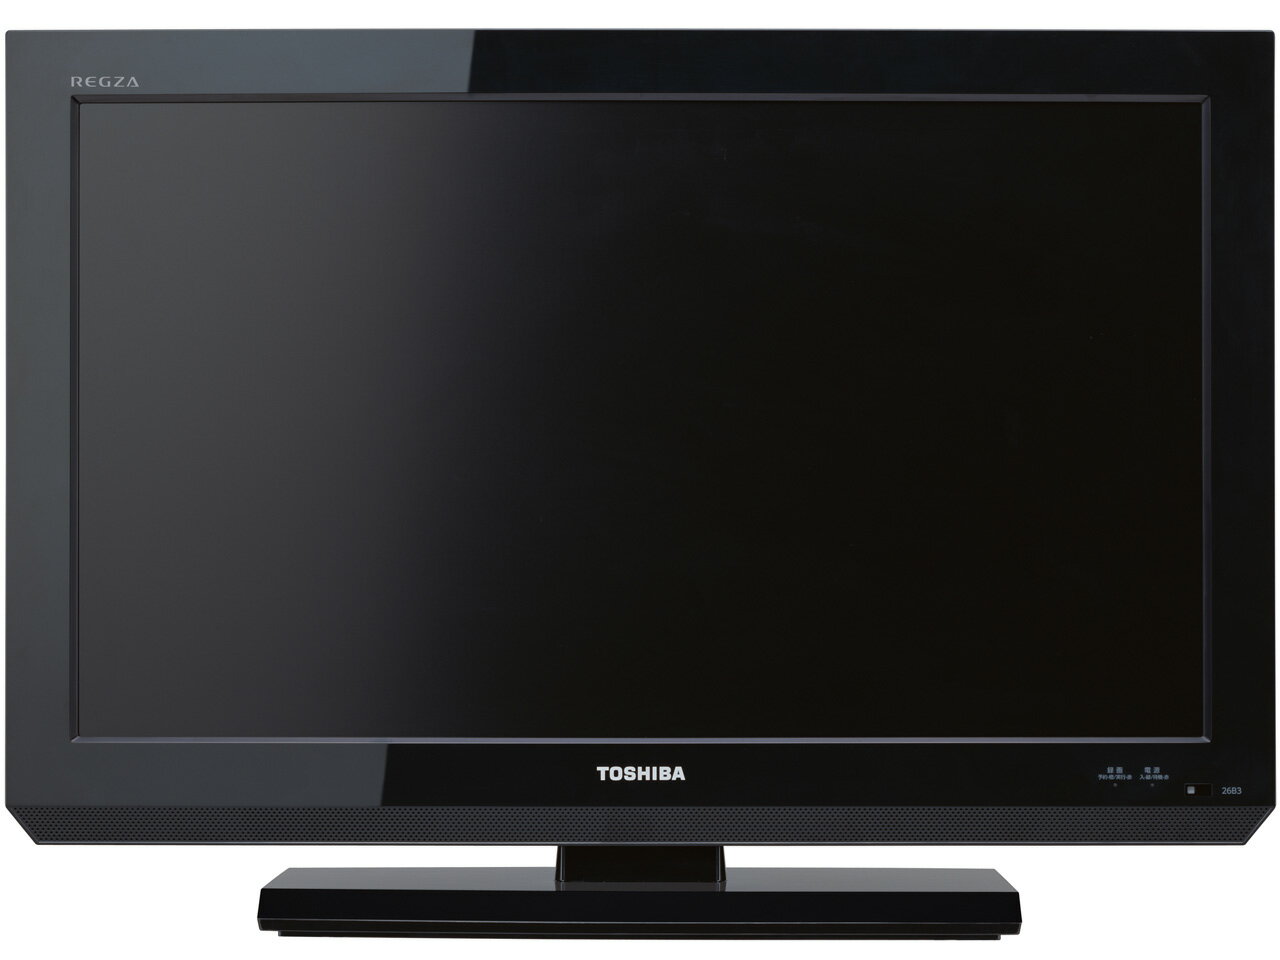 TOSHIBA 26V型 LED REGZA 26B3K(ブラック)液晶テレビ